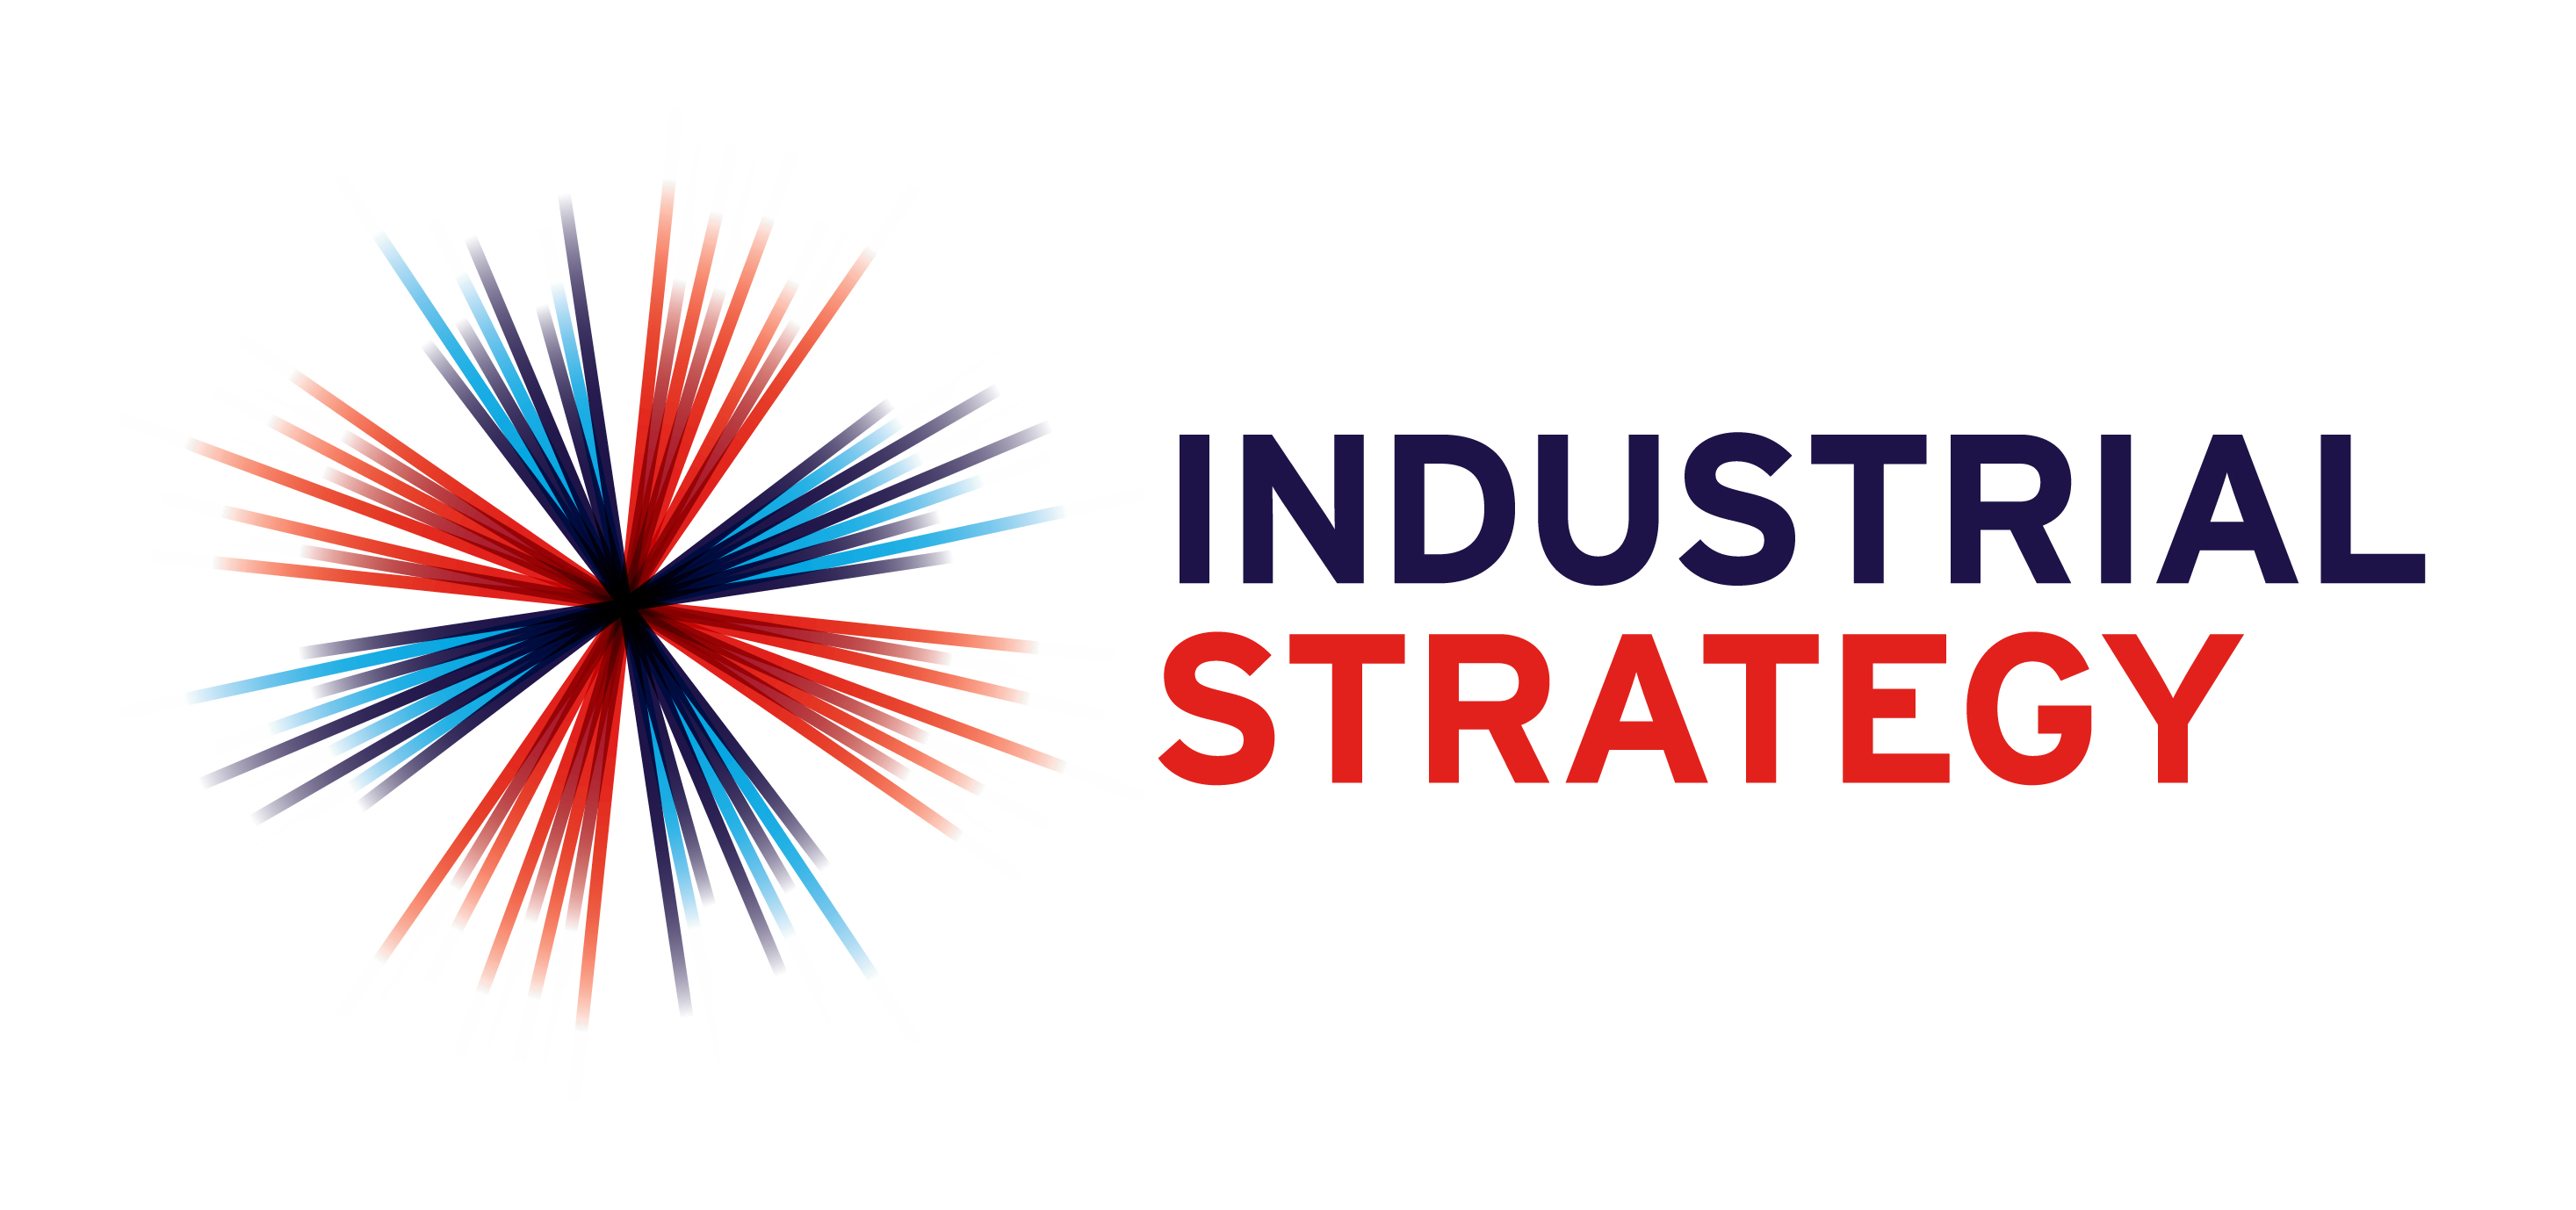 2019-05/1557996817_industrial-strategy-logo-2-